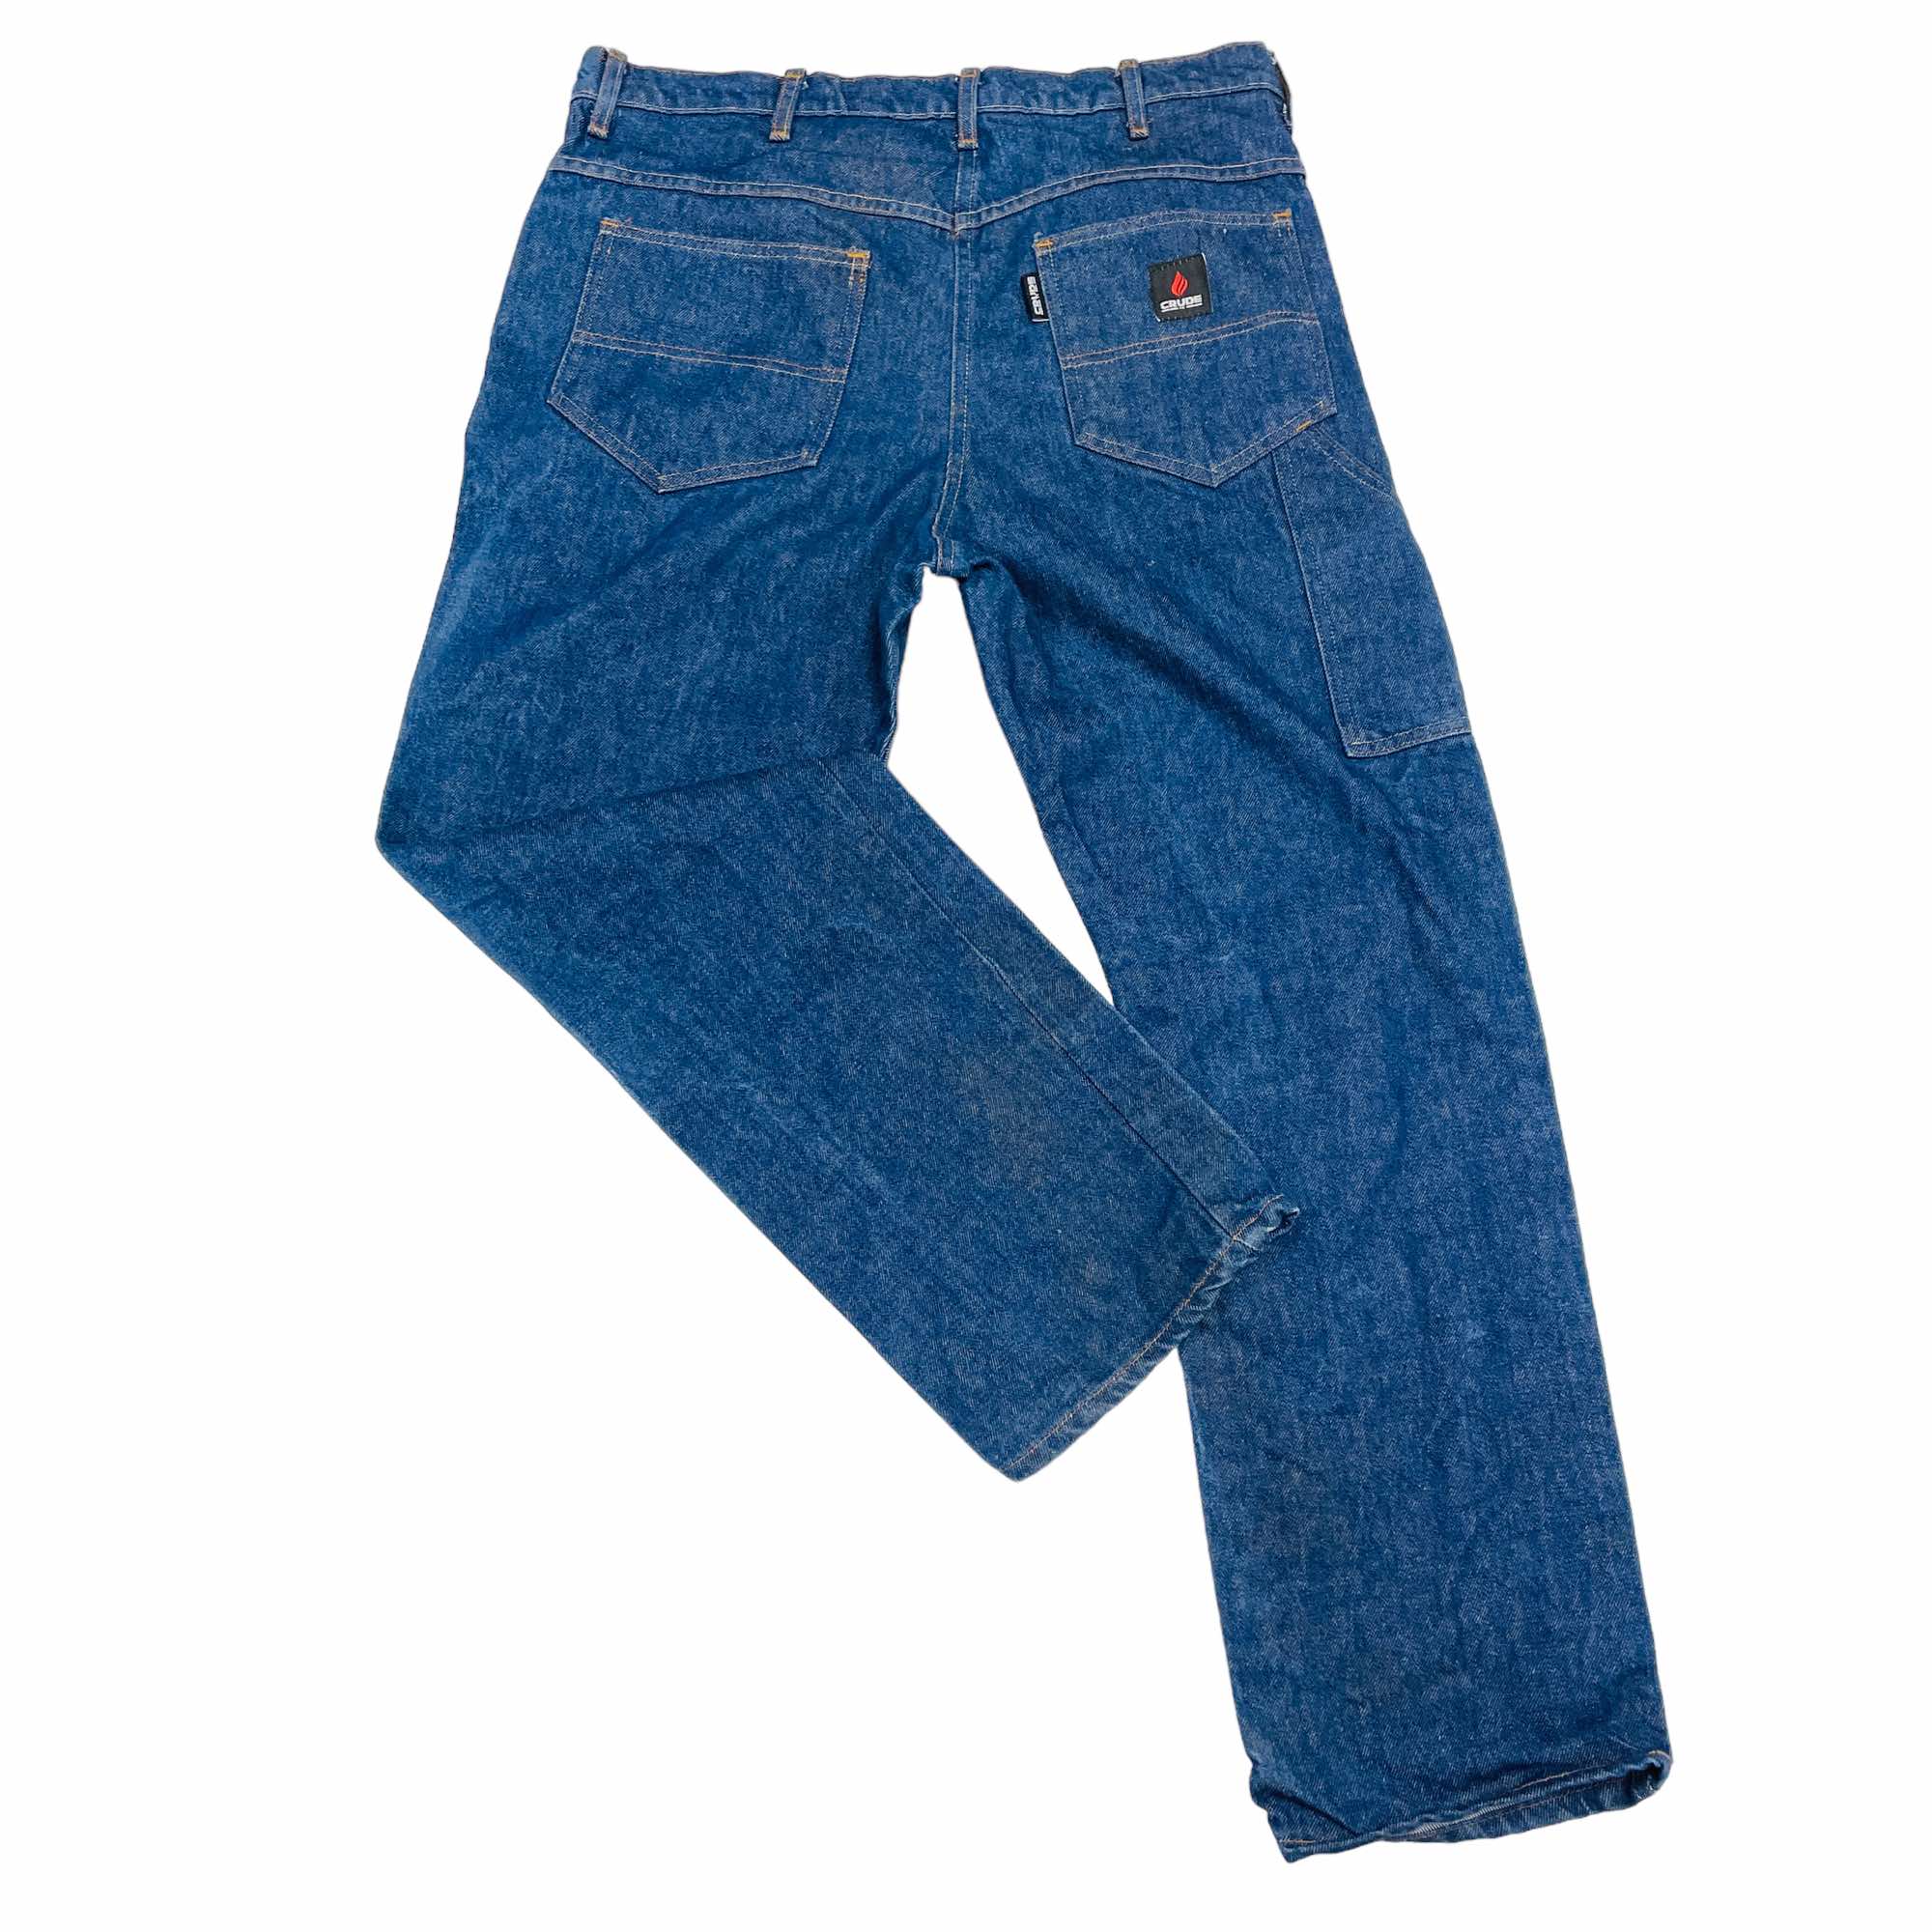 Crude FR Denim Jeans - W36 L30